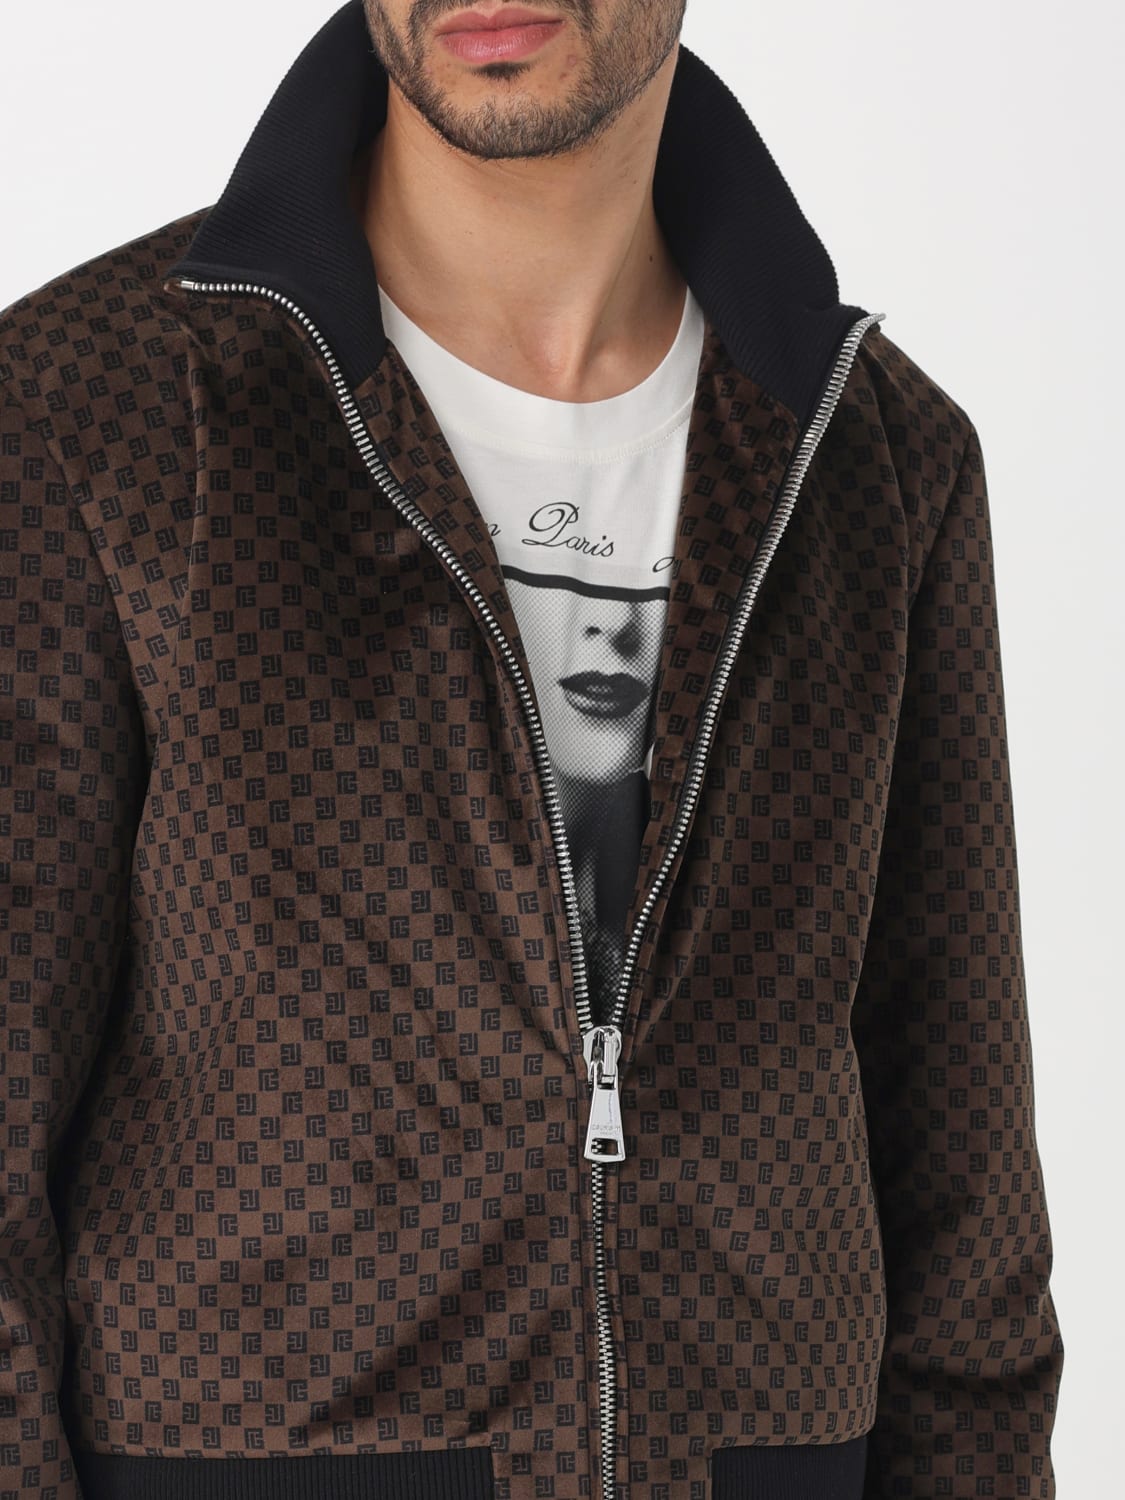 Louis Vuitton Men's Monogram Bomber Jacket